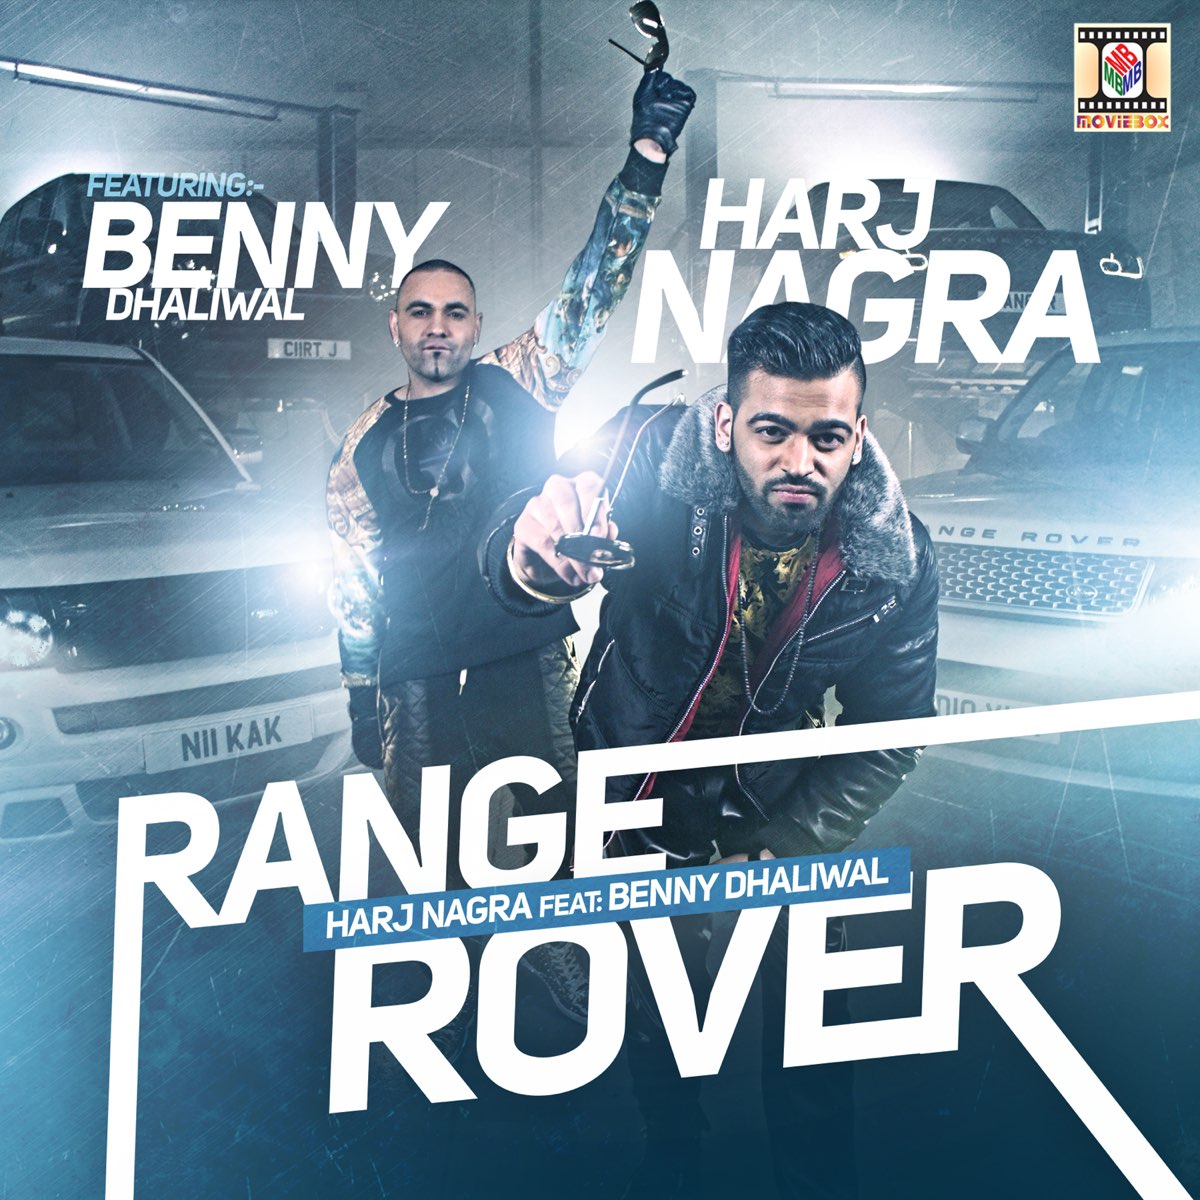 Benny feat. Range музыка. Rover песня. Harj. Песня про Рендж.